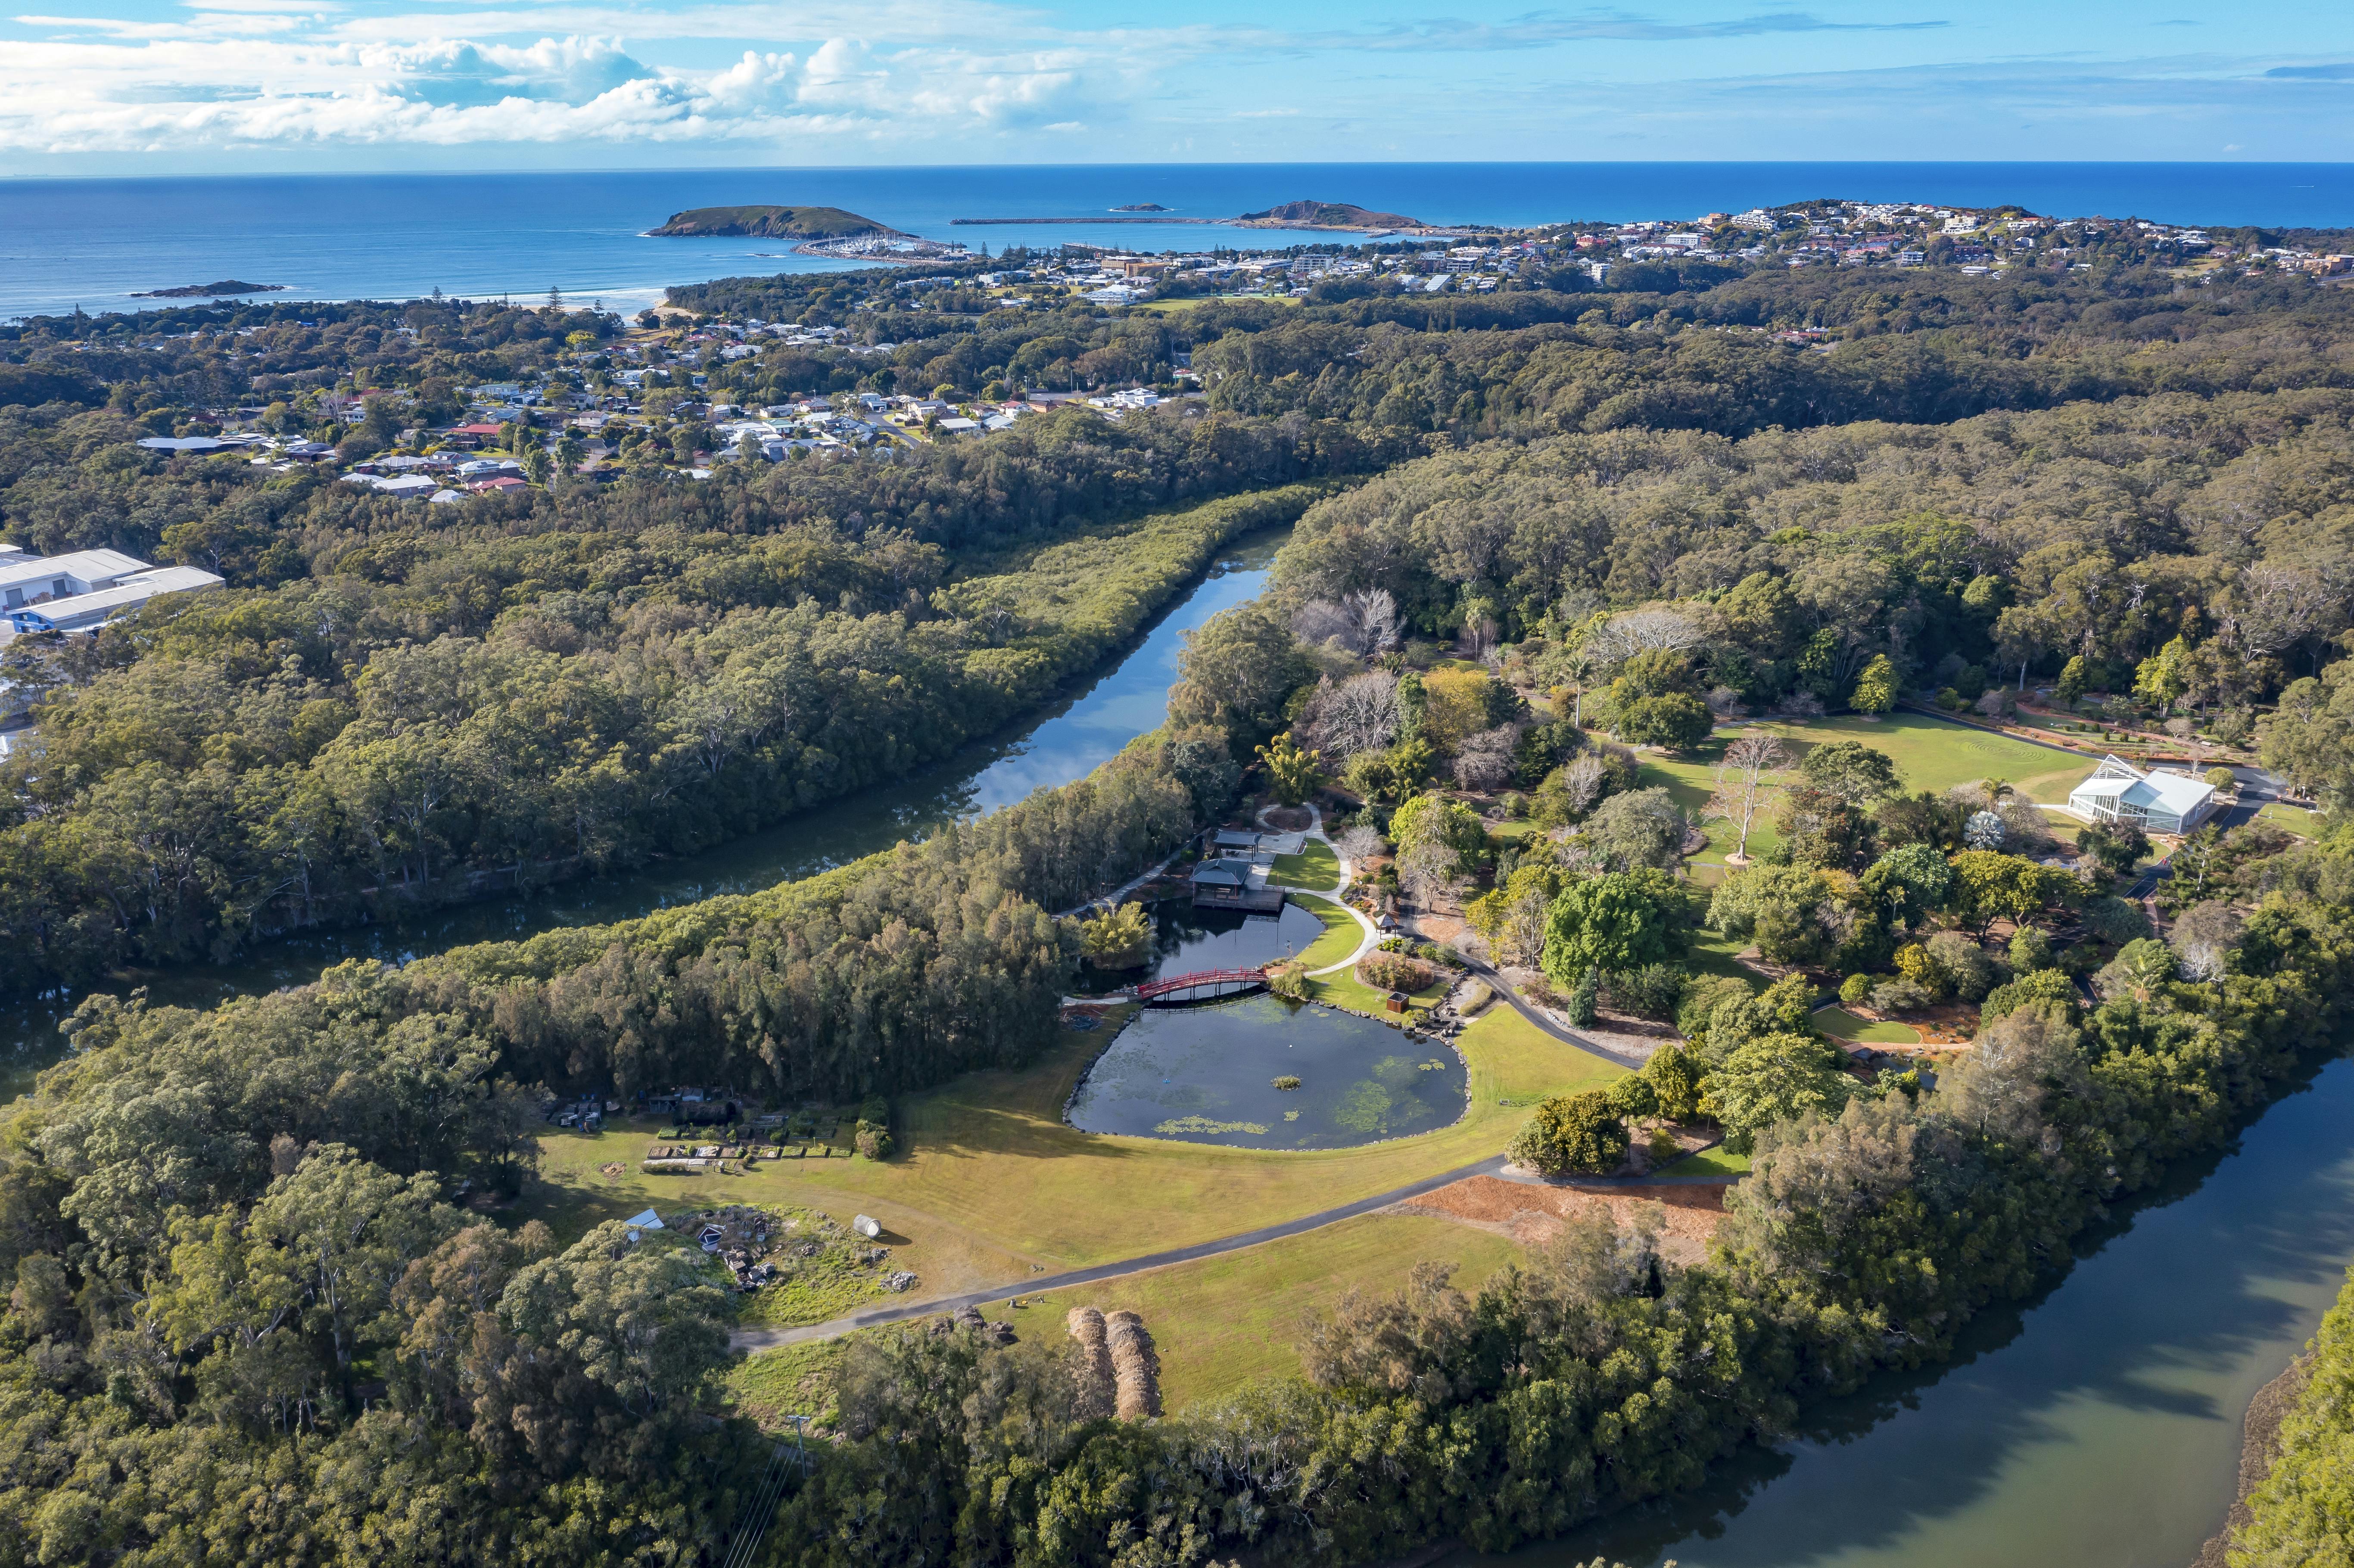 Coffs Harbour Botanic Garden - the only Ecotourism Certified botanic garden in NSW